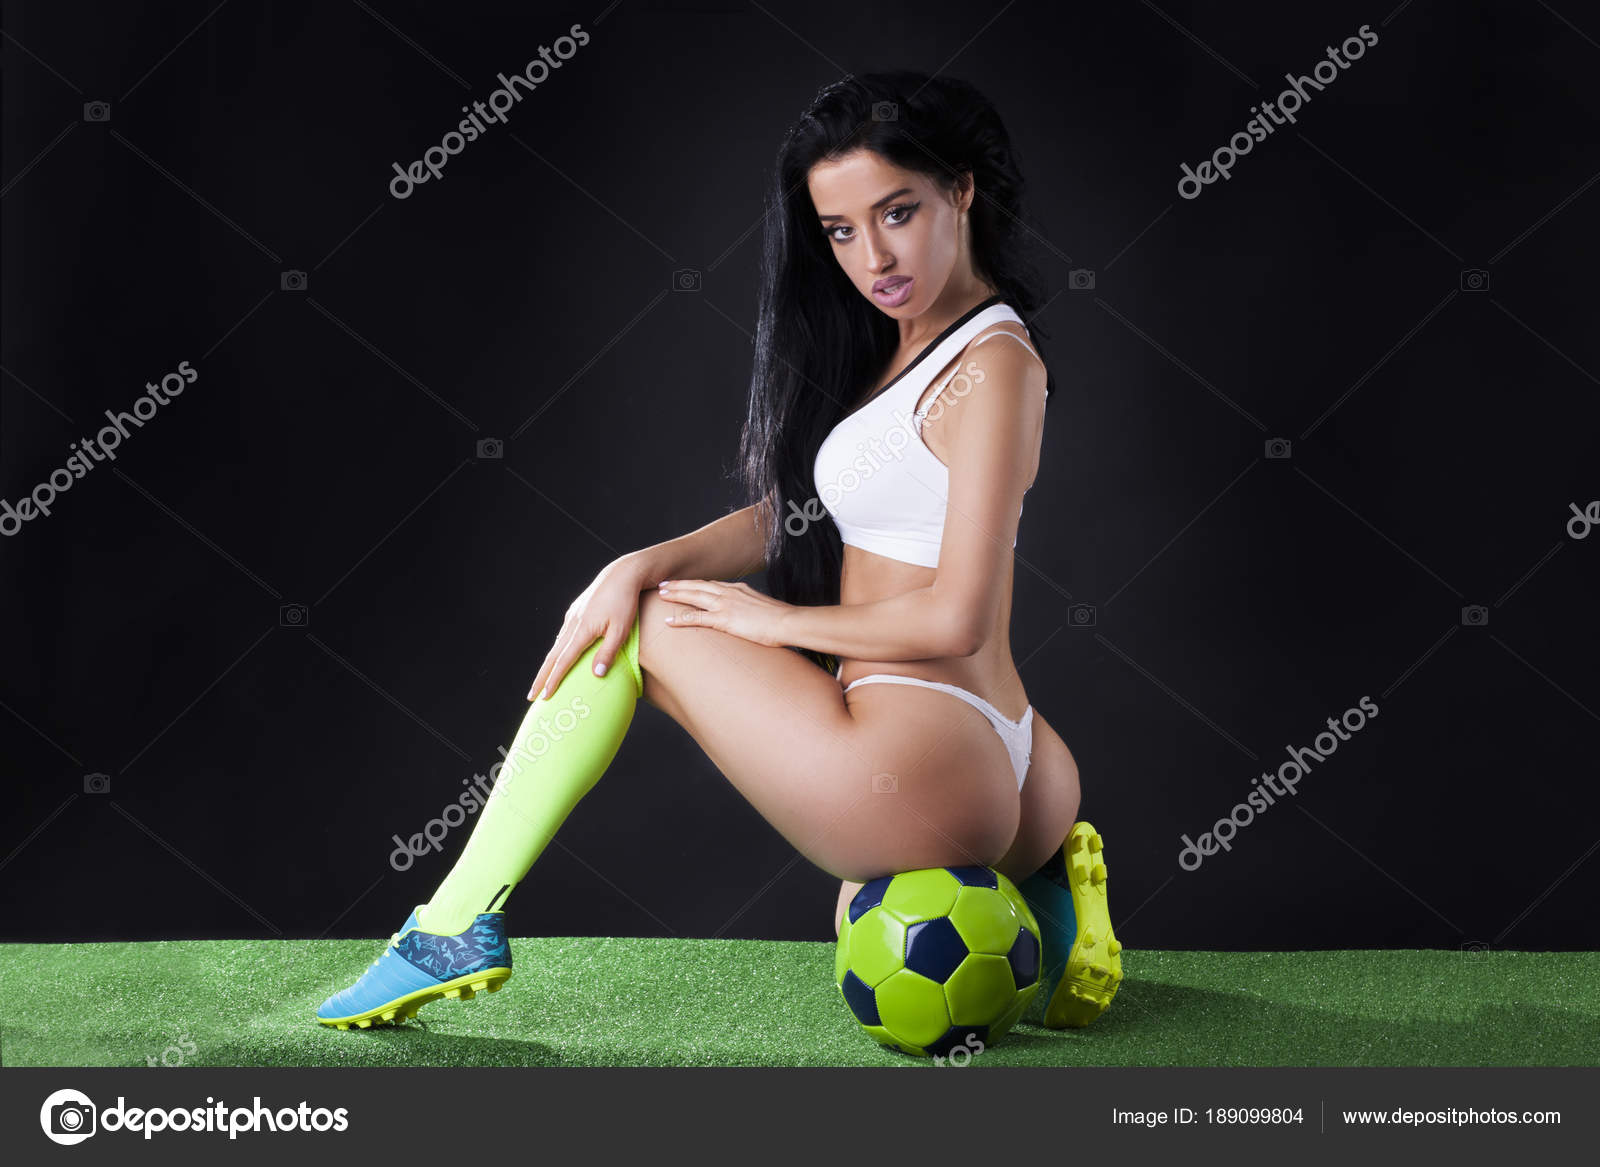 Erotic woman in grass